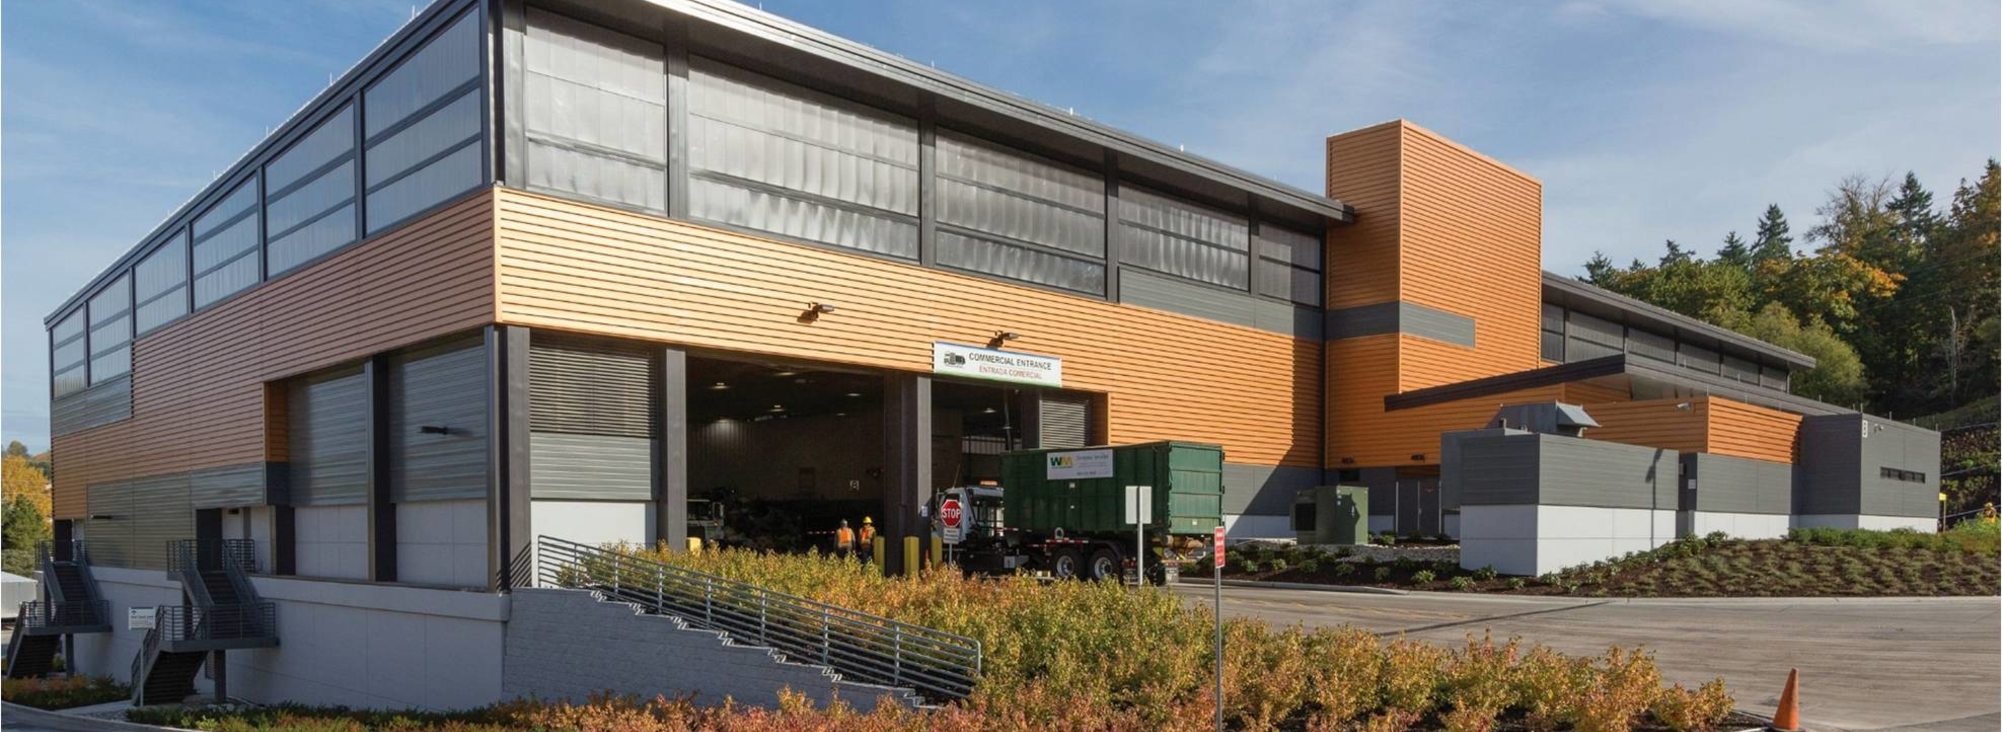 An image of the Factoria transfer center in Bellevue, Washington